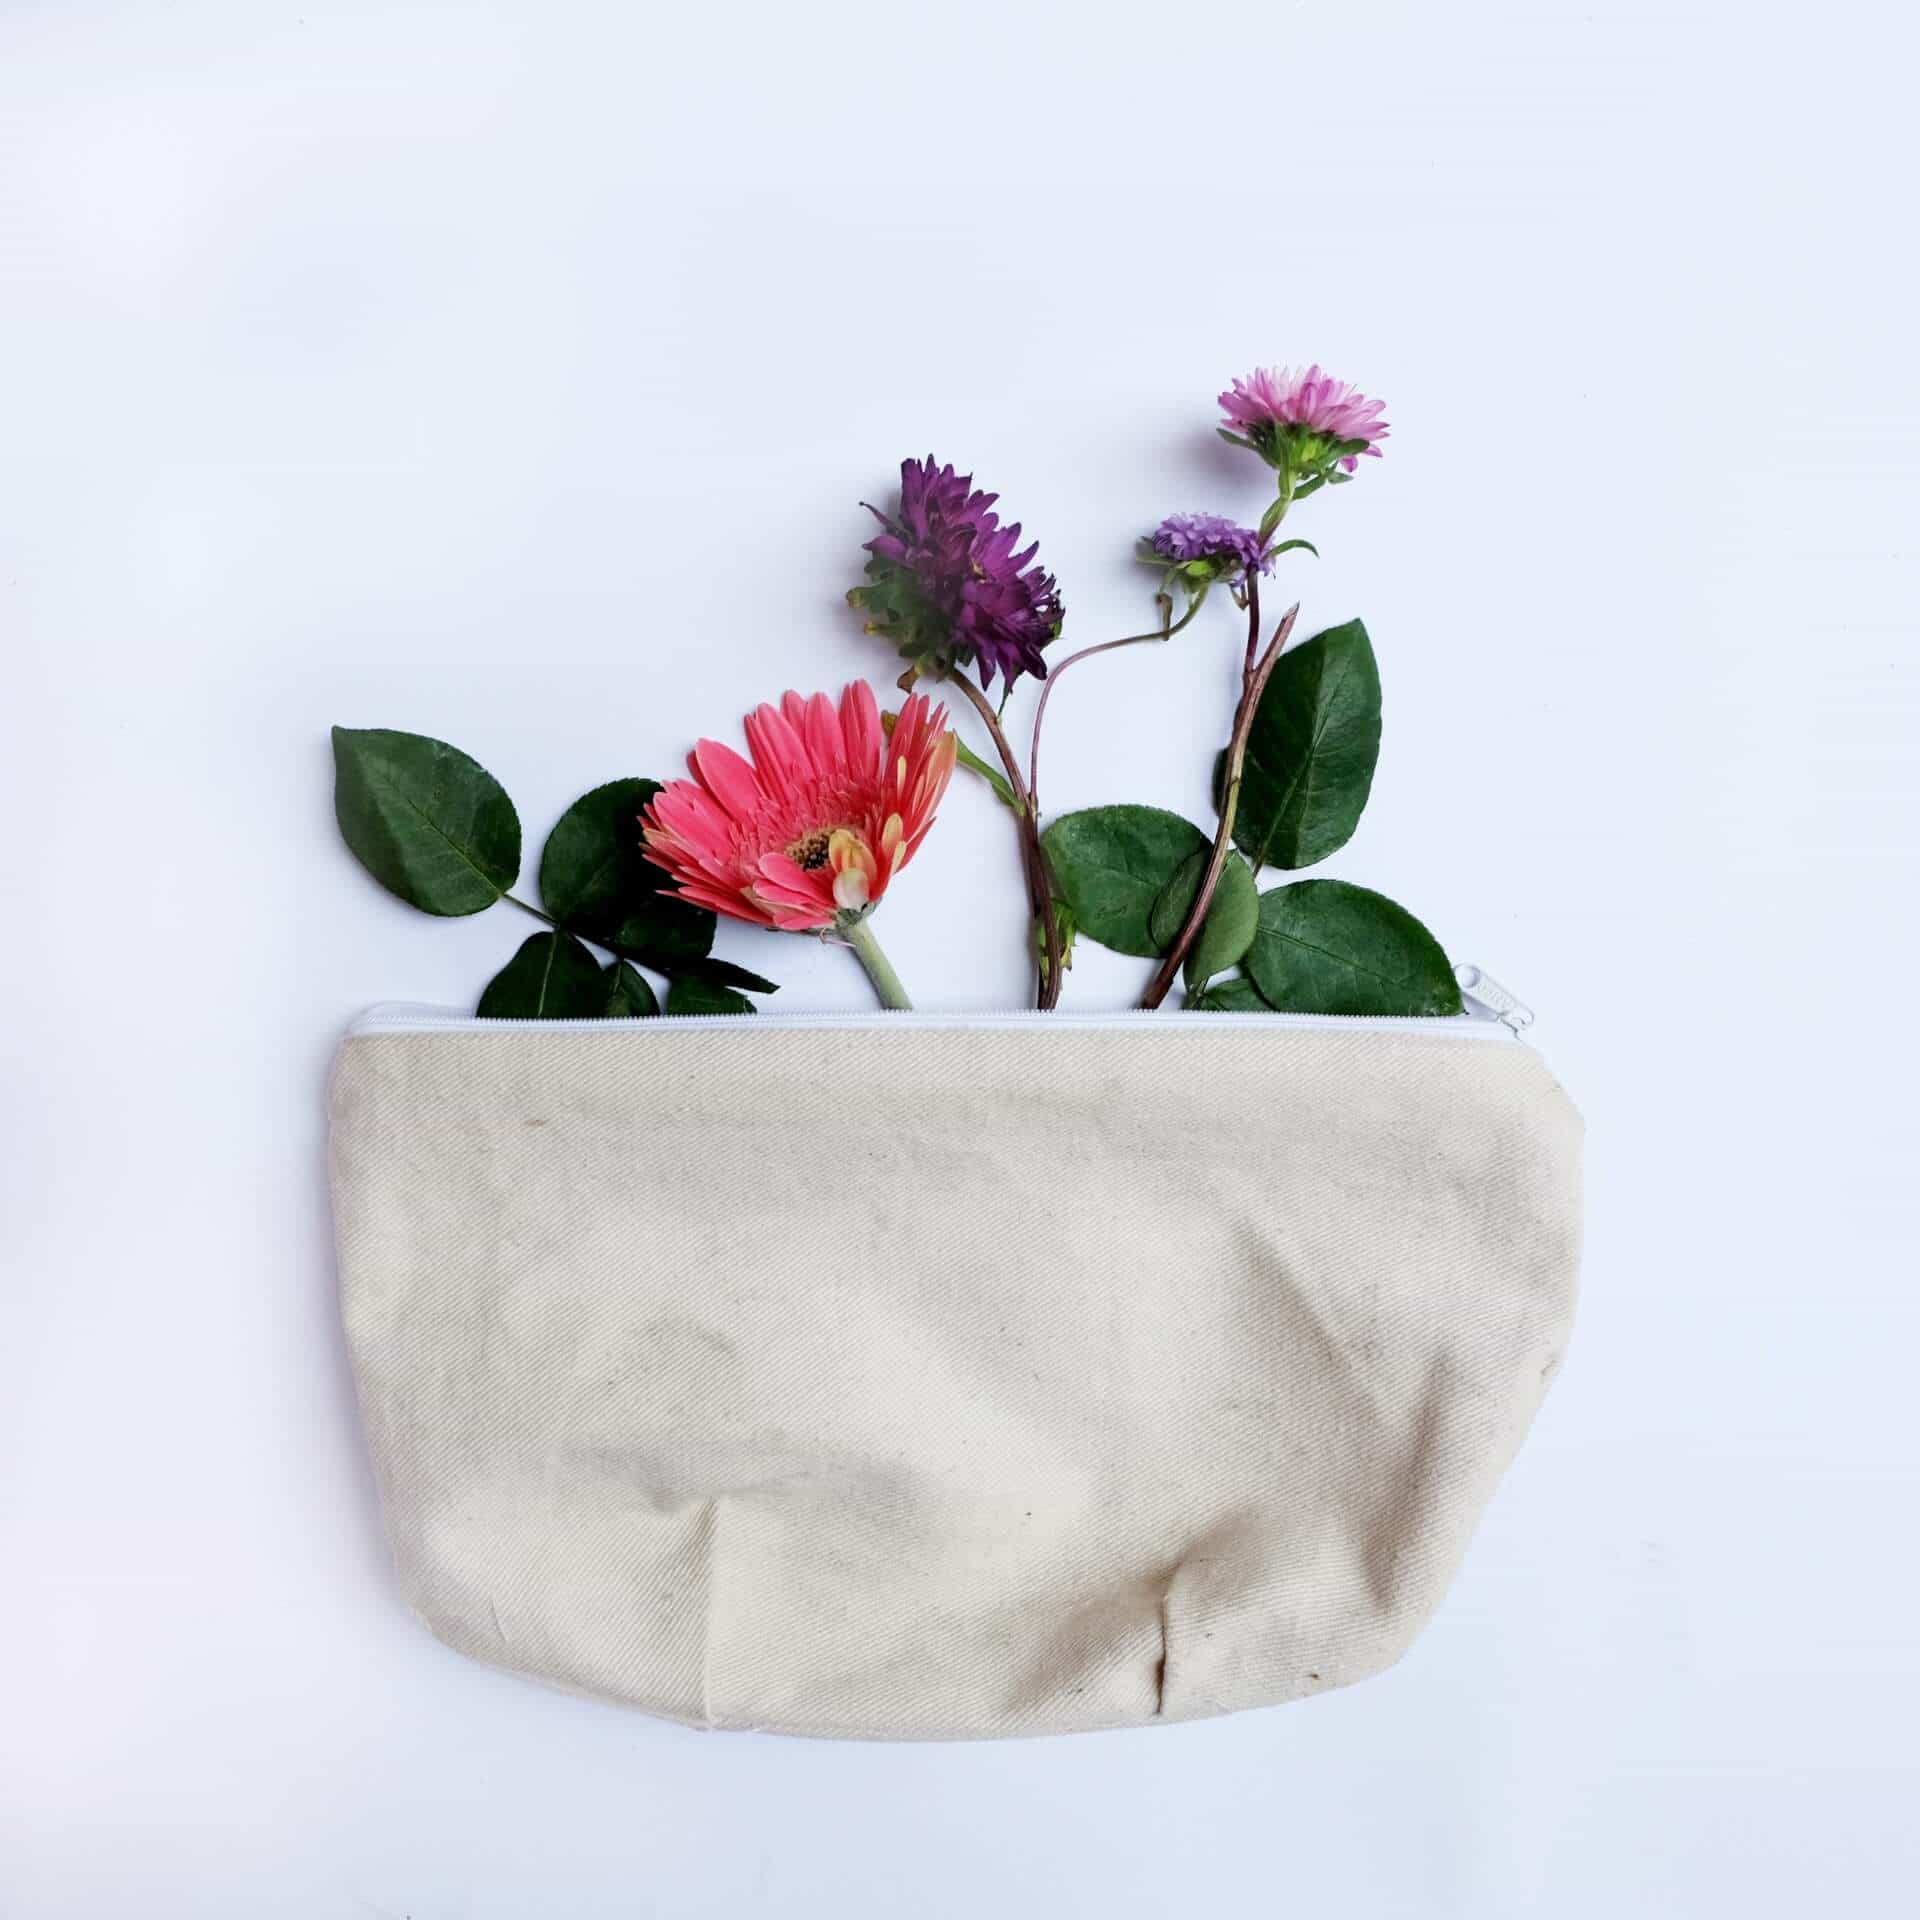 A makeup bag with a floral arrangement